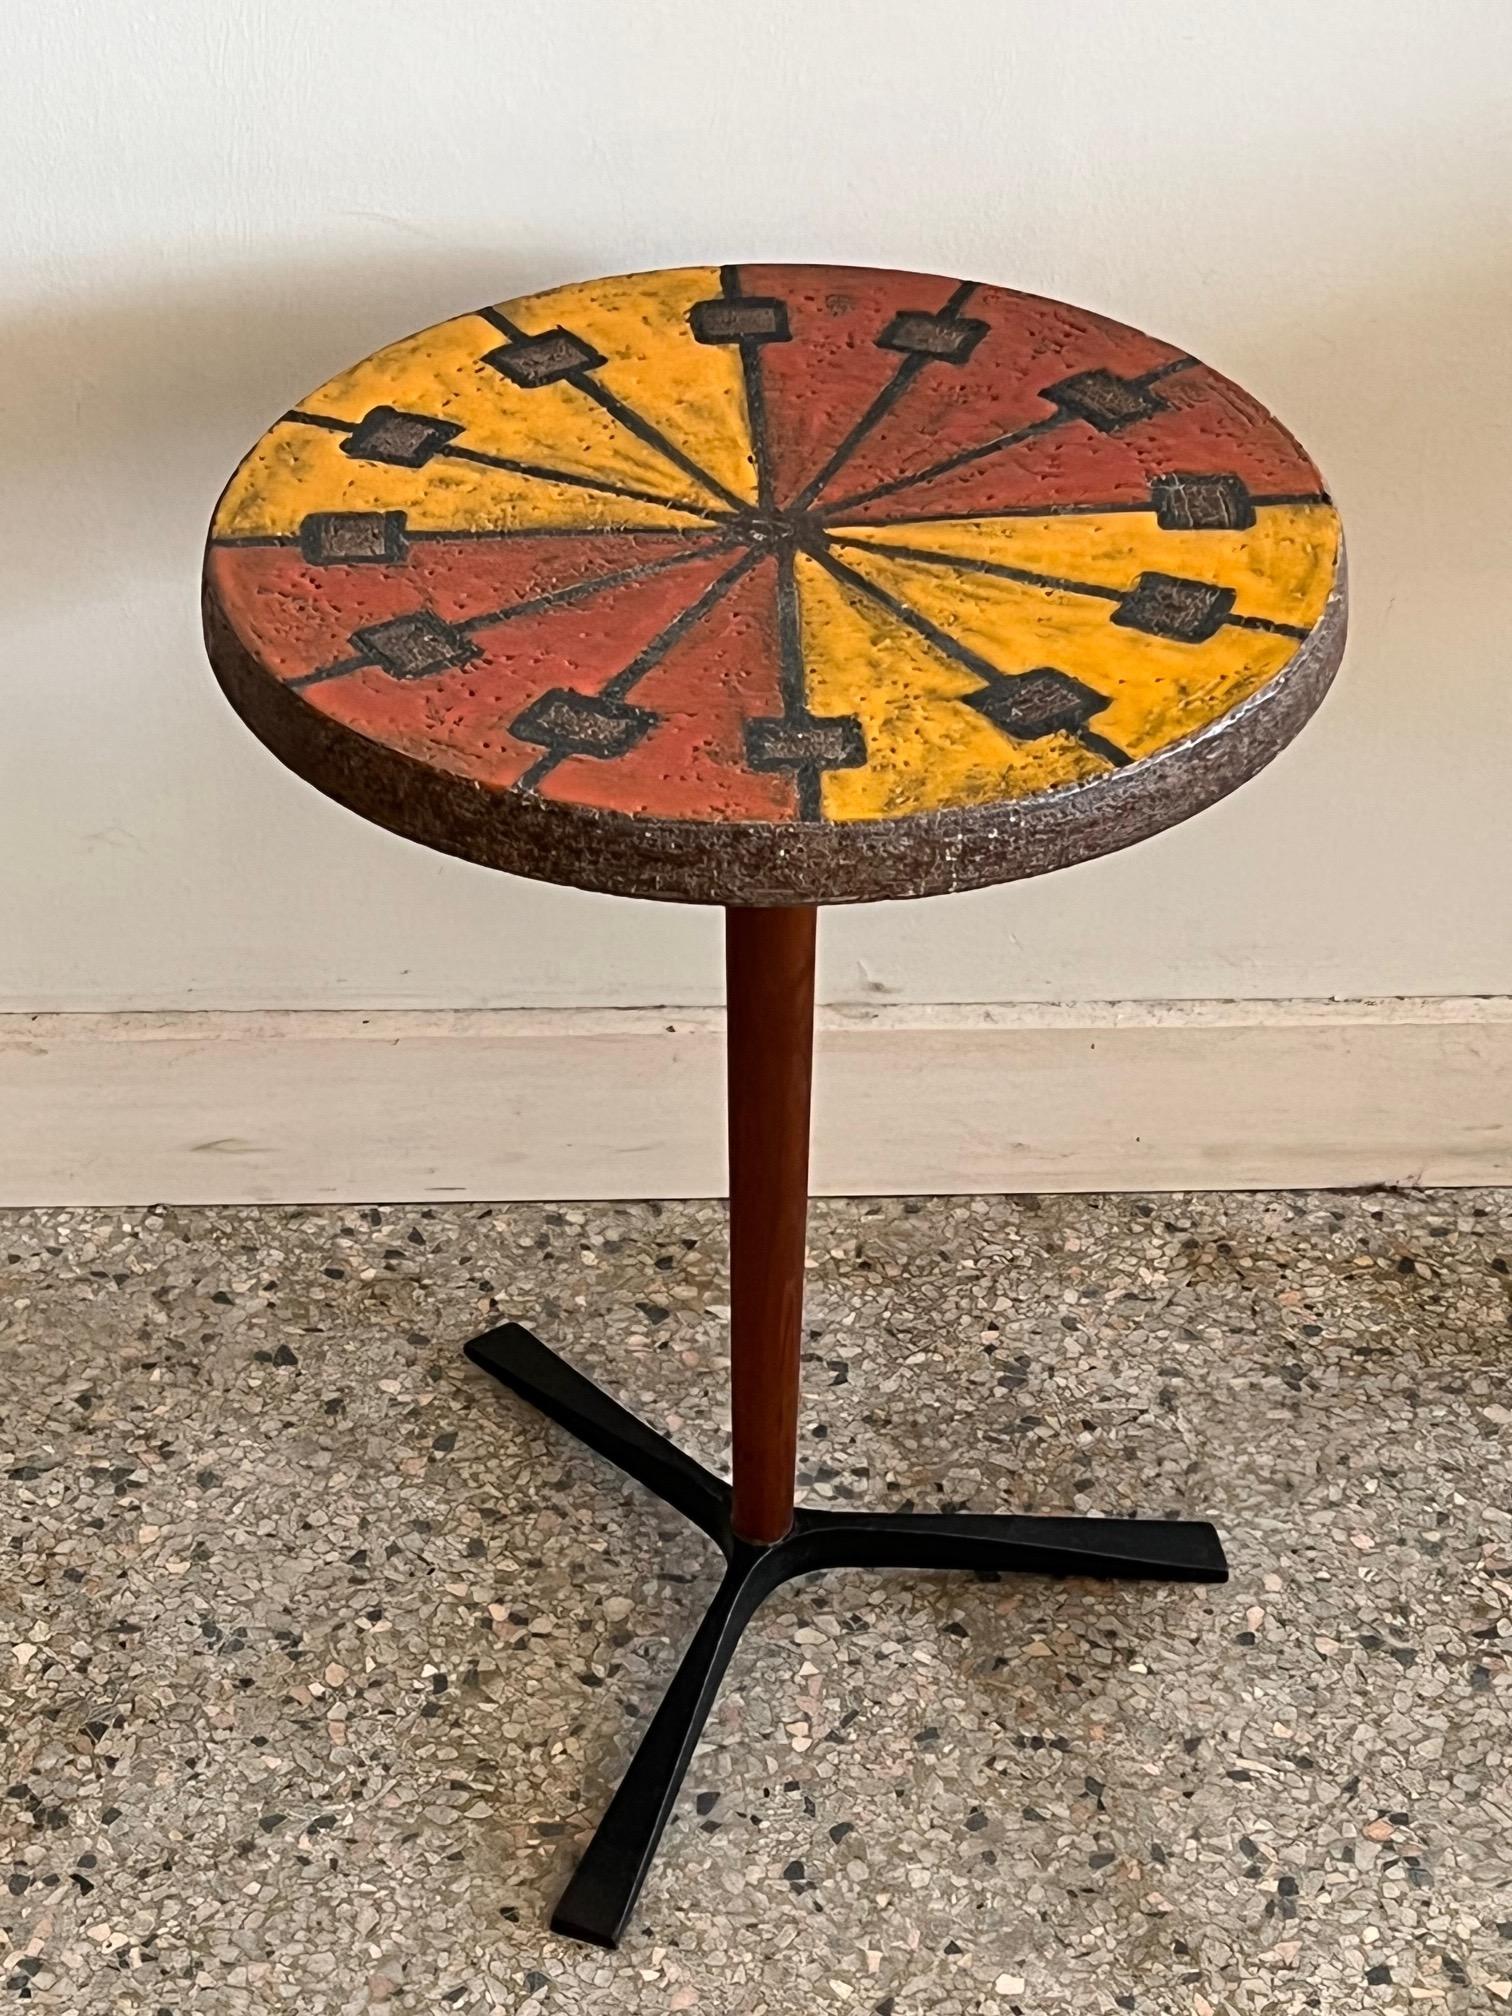 Unusual side table or gueridon by Aldo Londi for Bitossi, Italy, 1960's. Ceramic on walnut/iron tripod base.